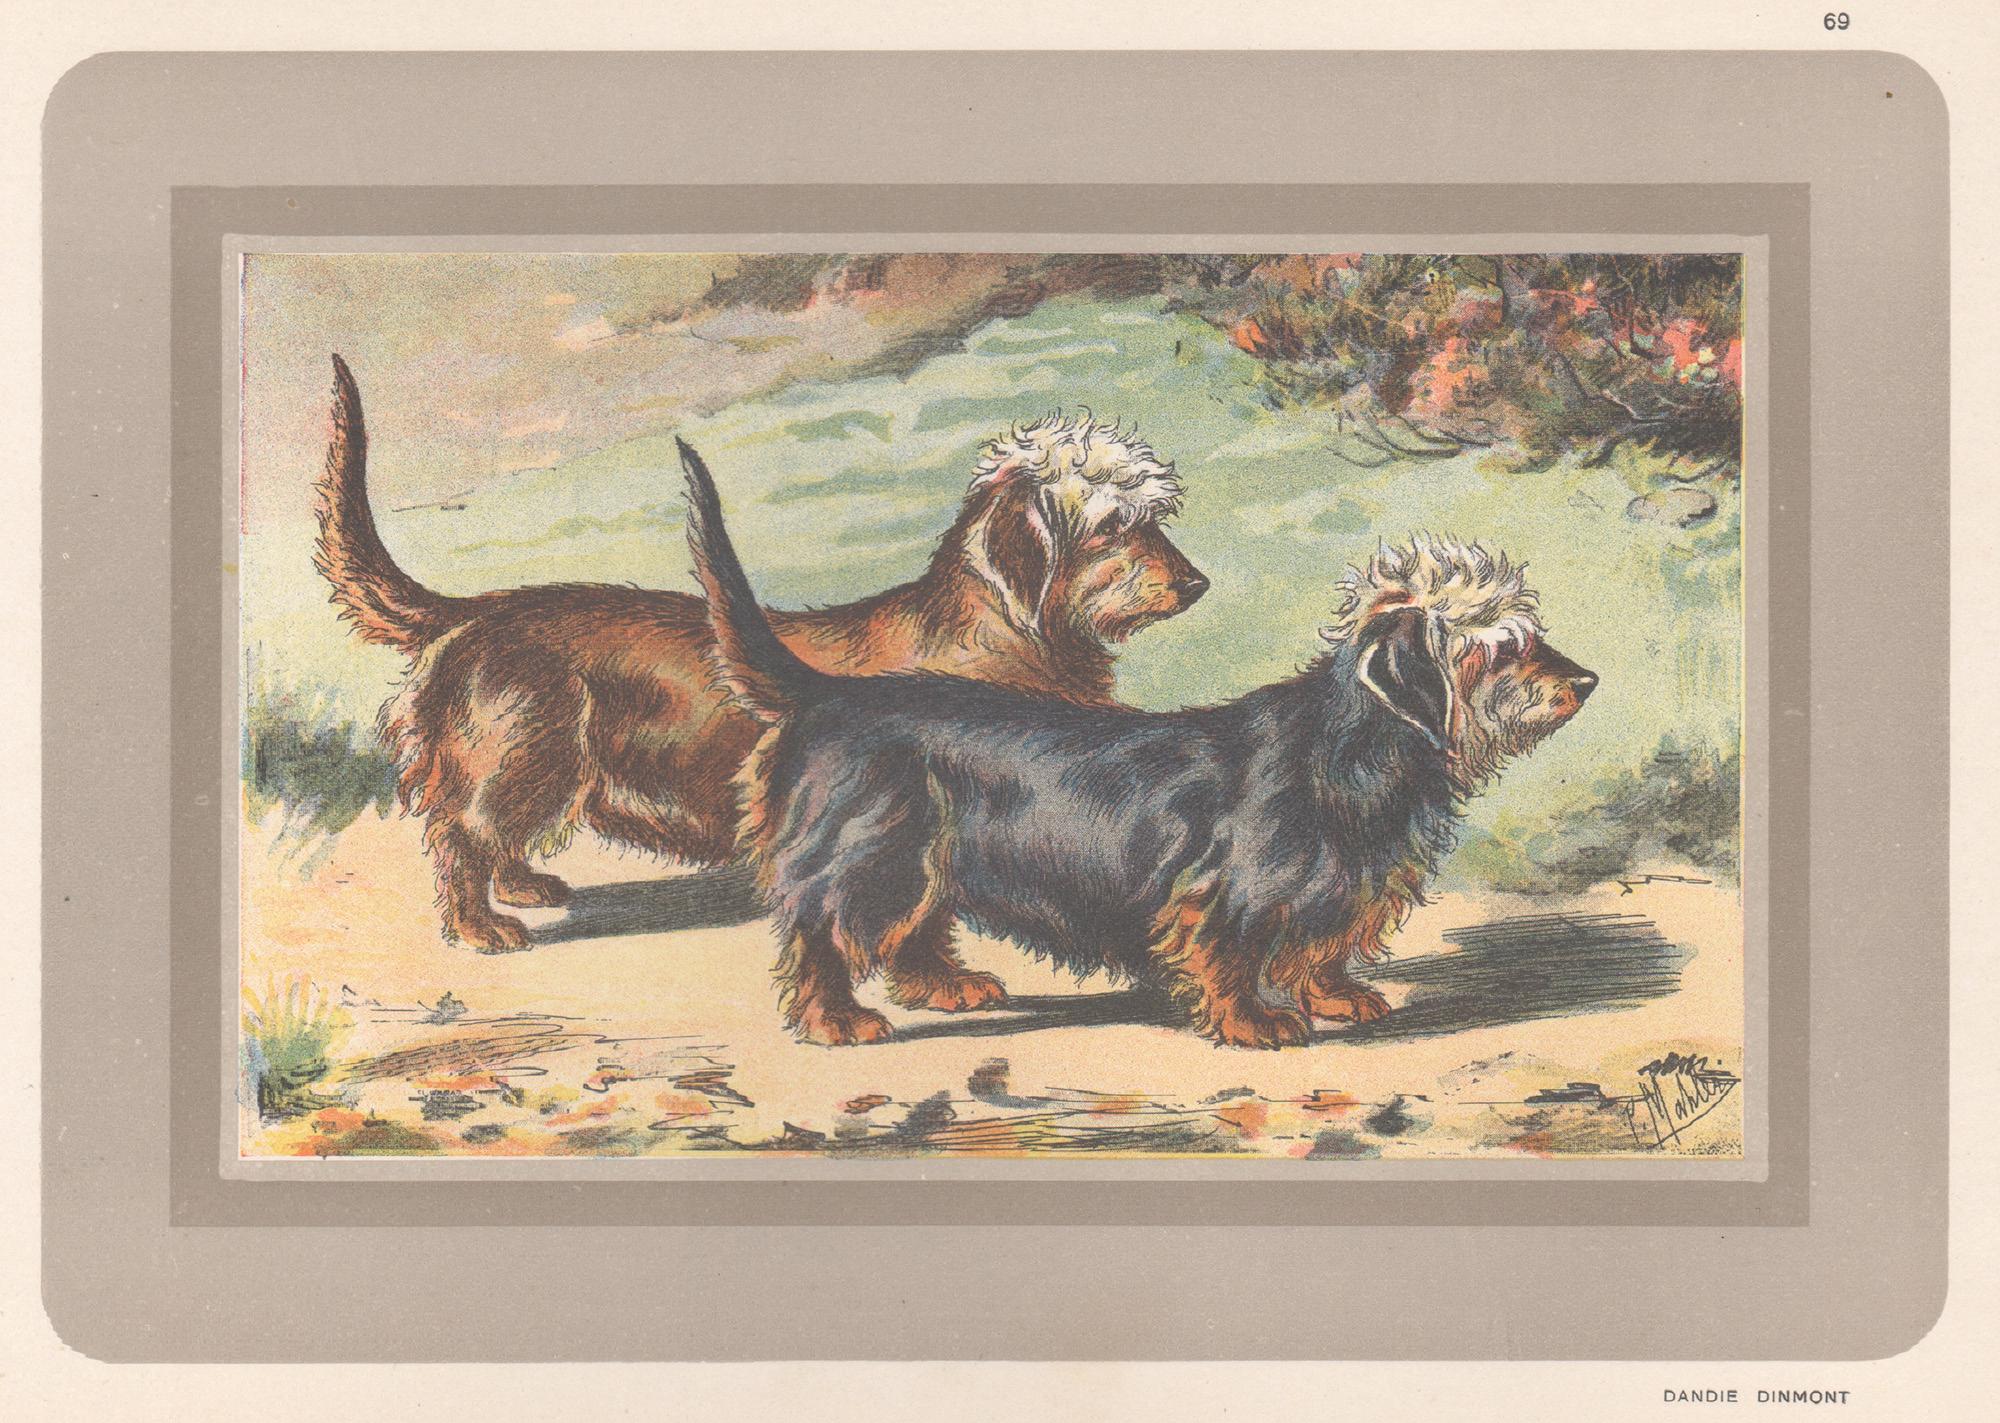 P. Mahler Animal Print - Dandie Dinmont, French hound dog chromolithograph print, 1930s